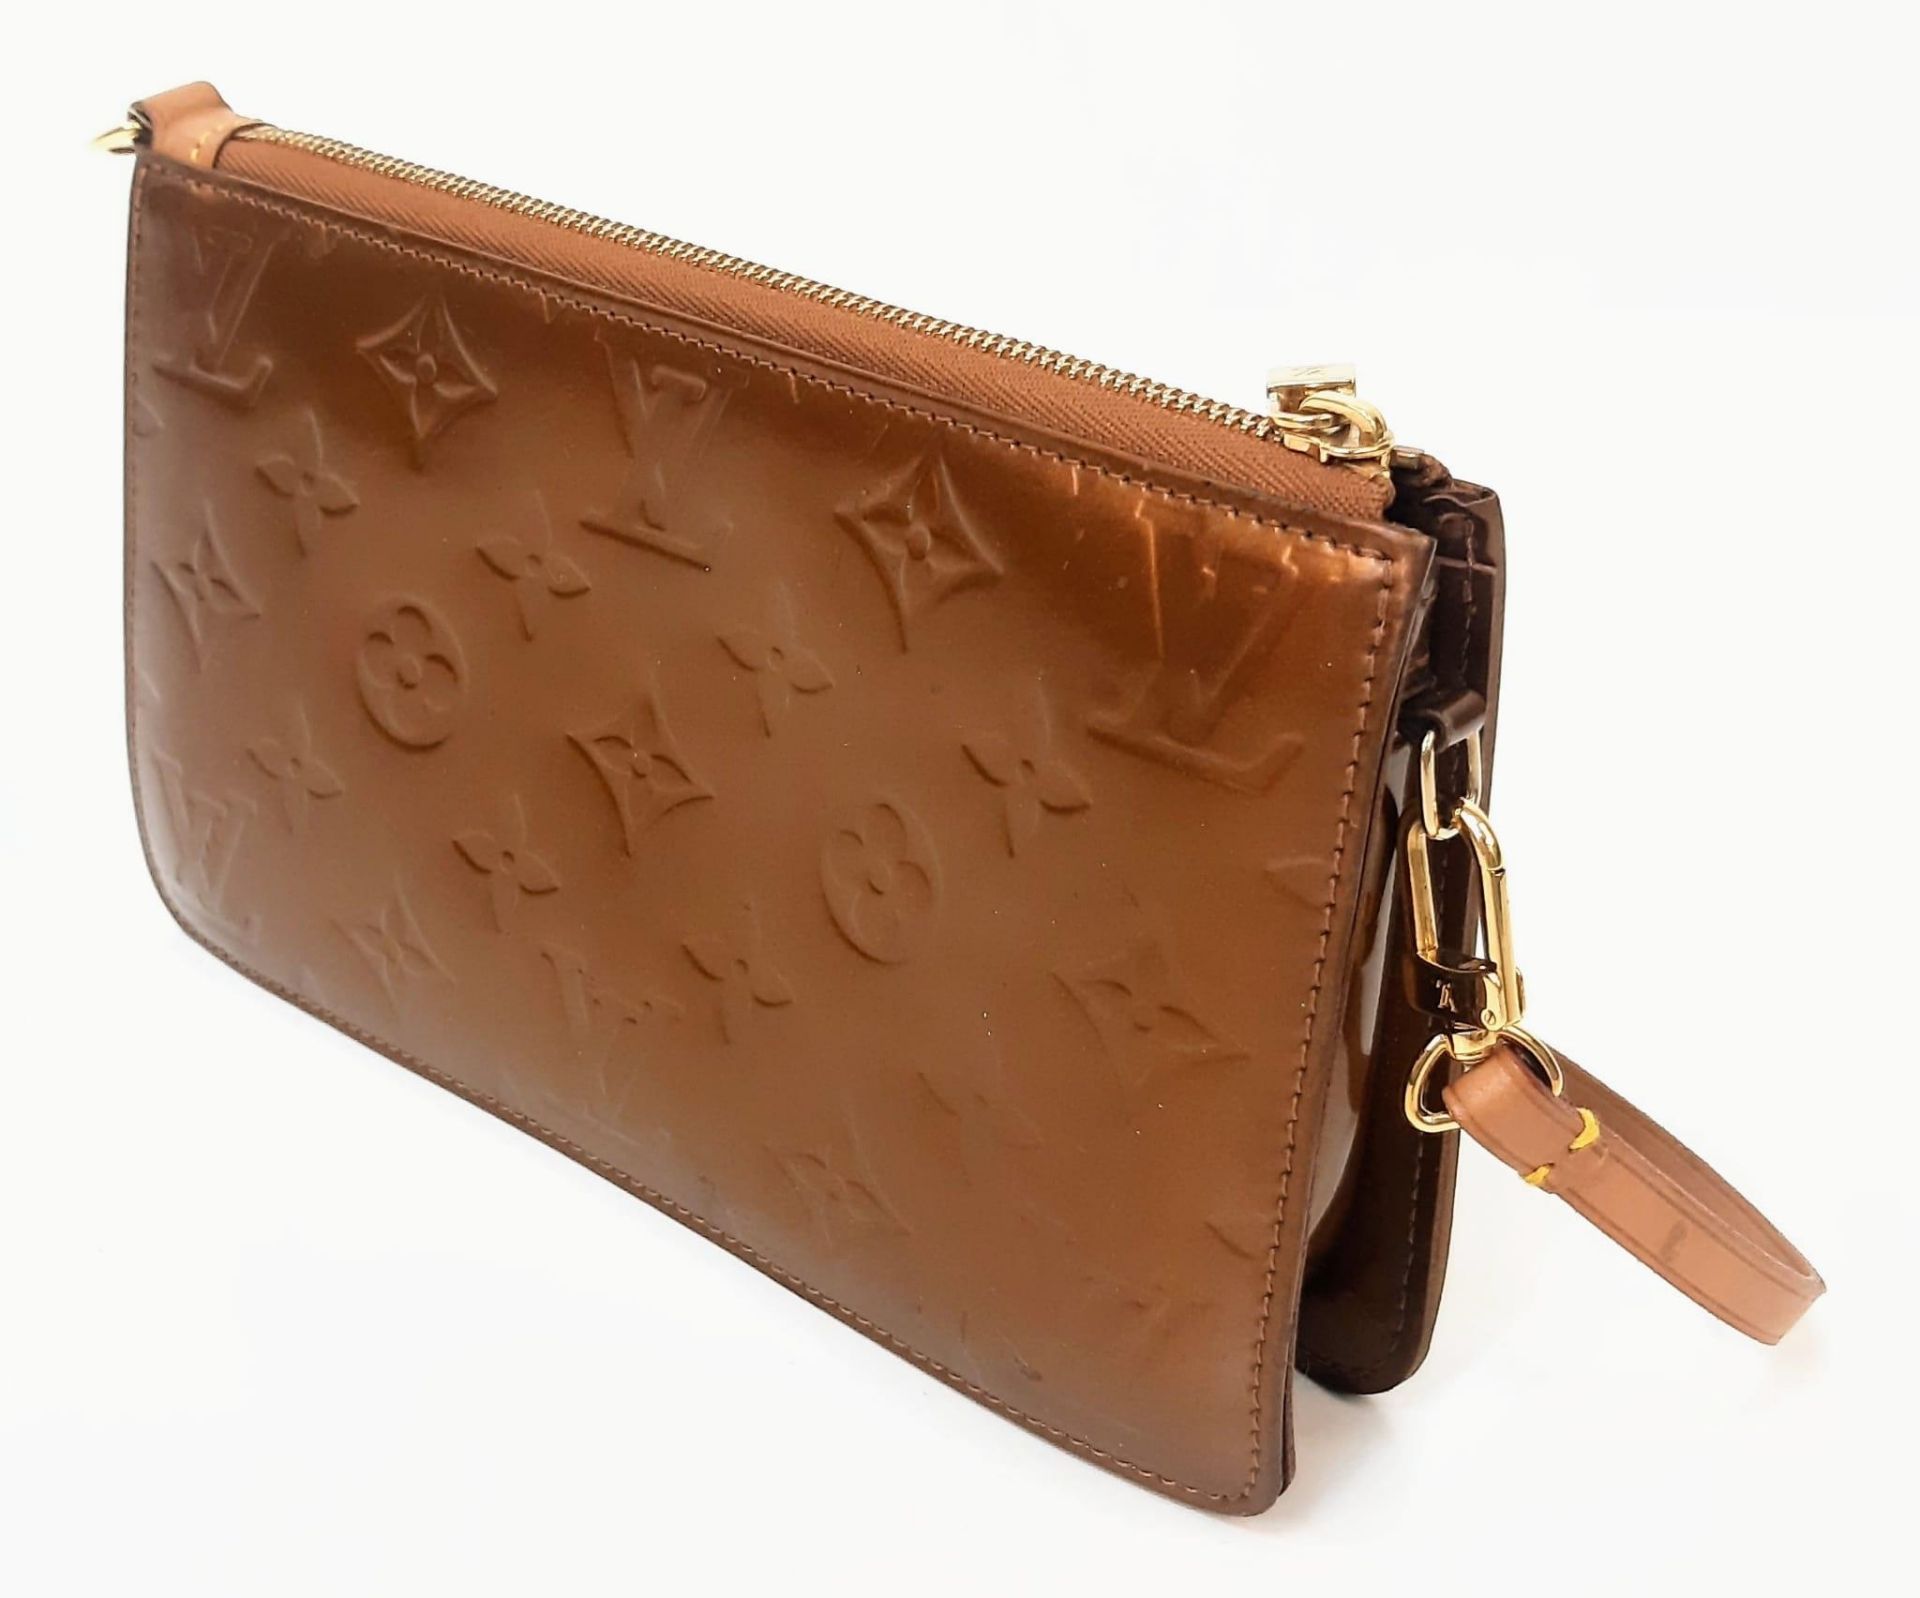 A Louis Vuitton Vernis Pochette Shoulder Bag in Copper, Emboss LV Detailing, Dark Tan Leather Strap. - Image 3 of 7